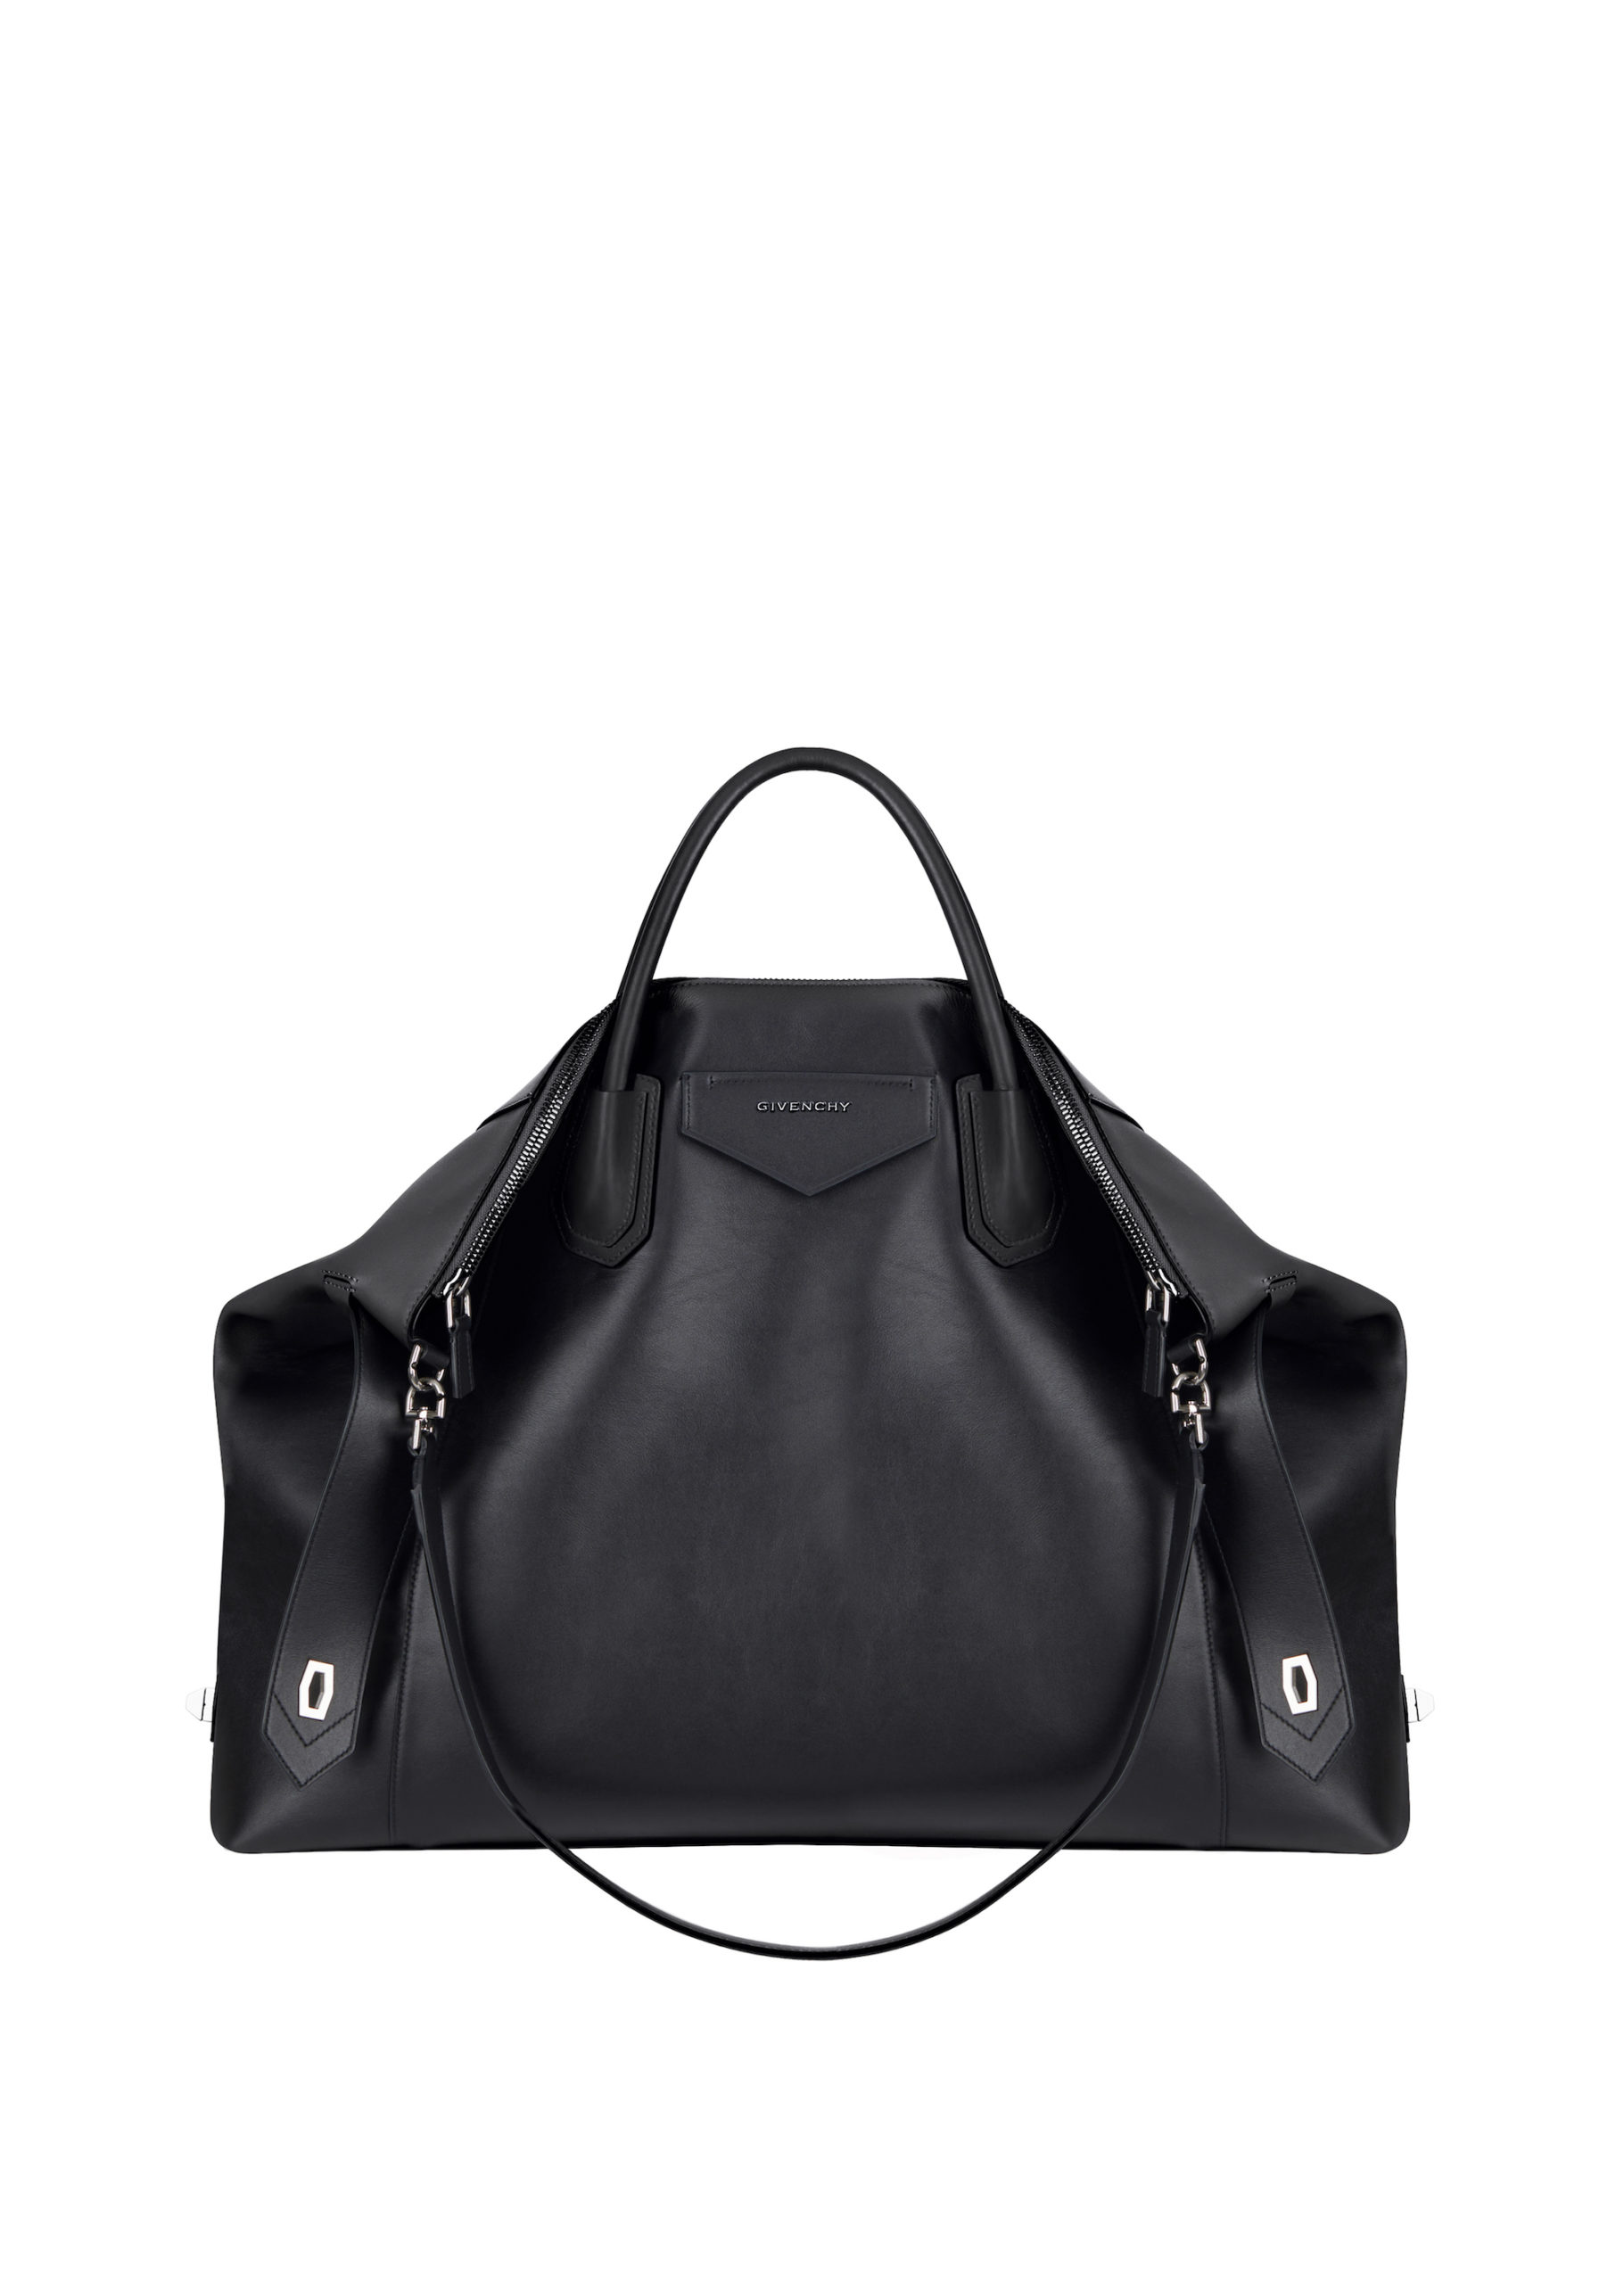 Givenchy Antigona Bag Giveaway on Instagram — Hello Lovely Living